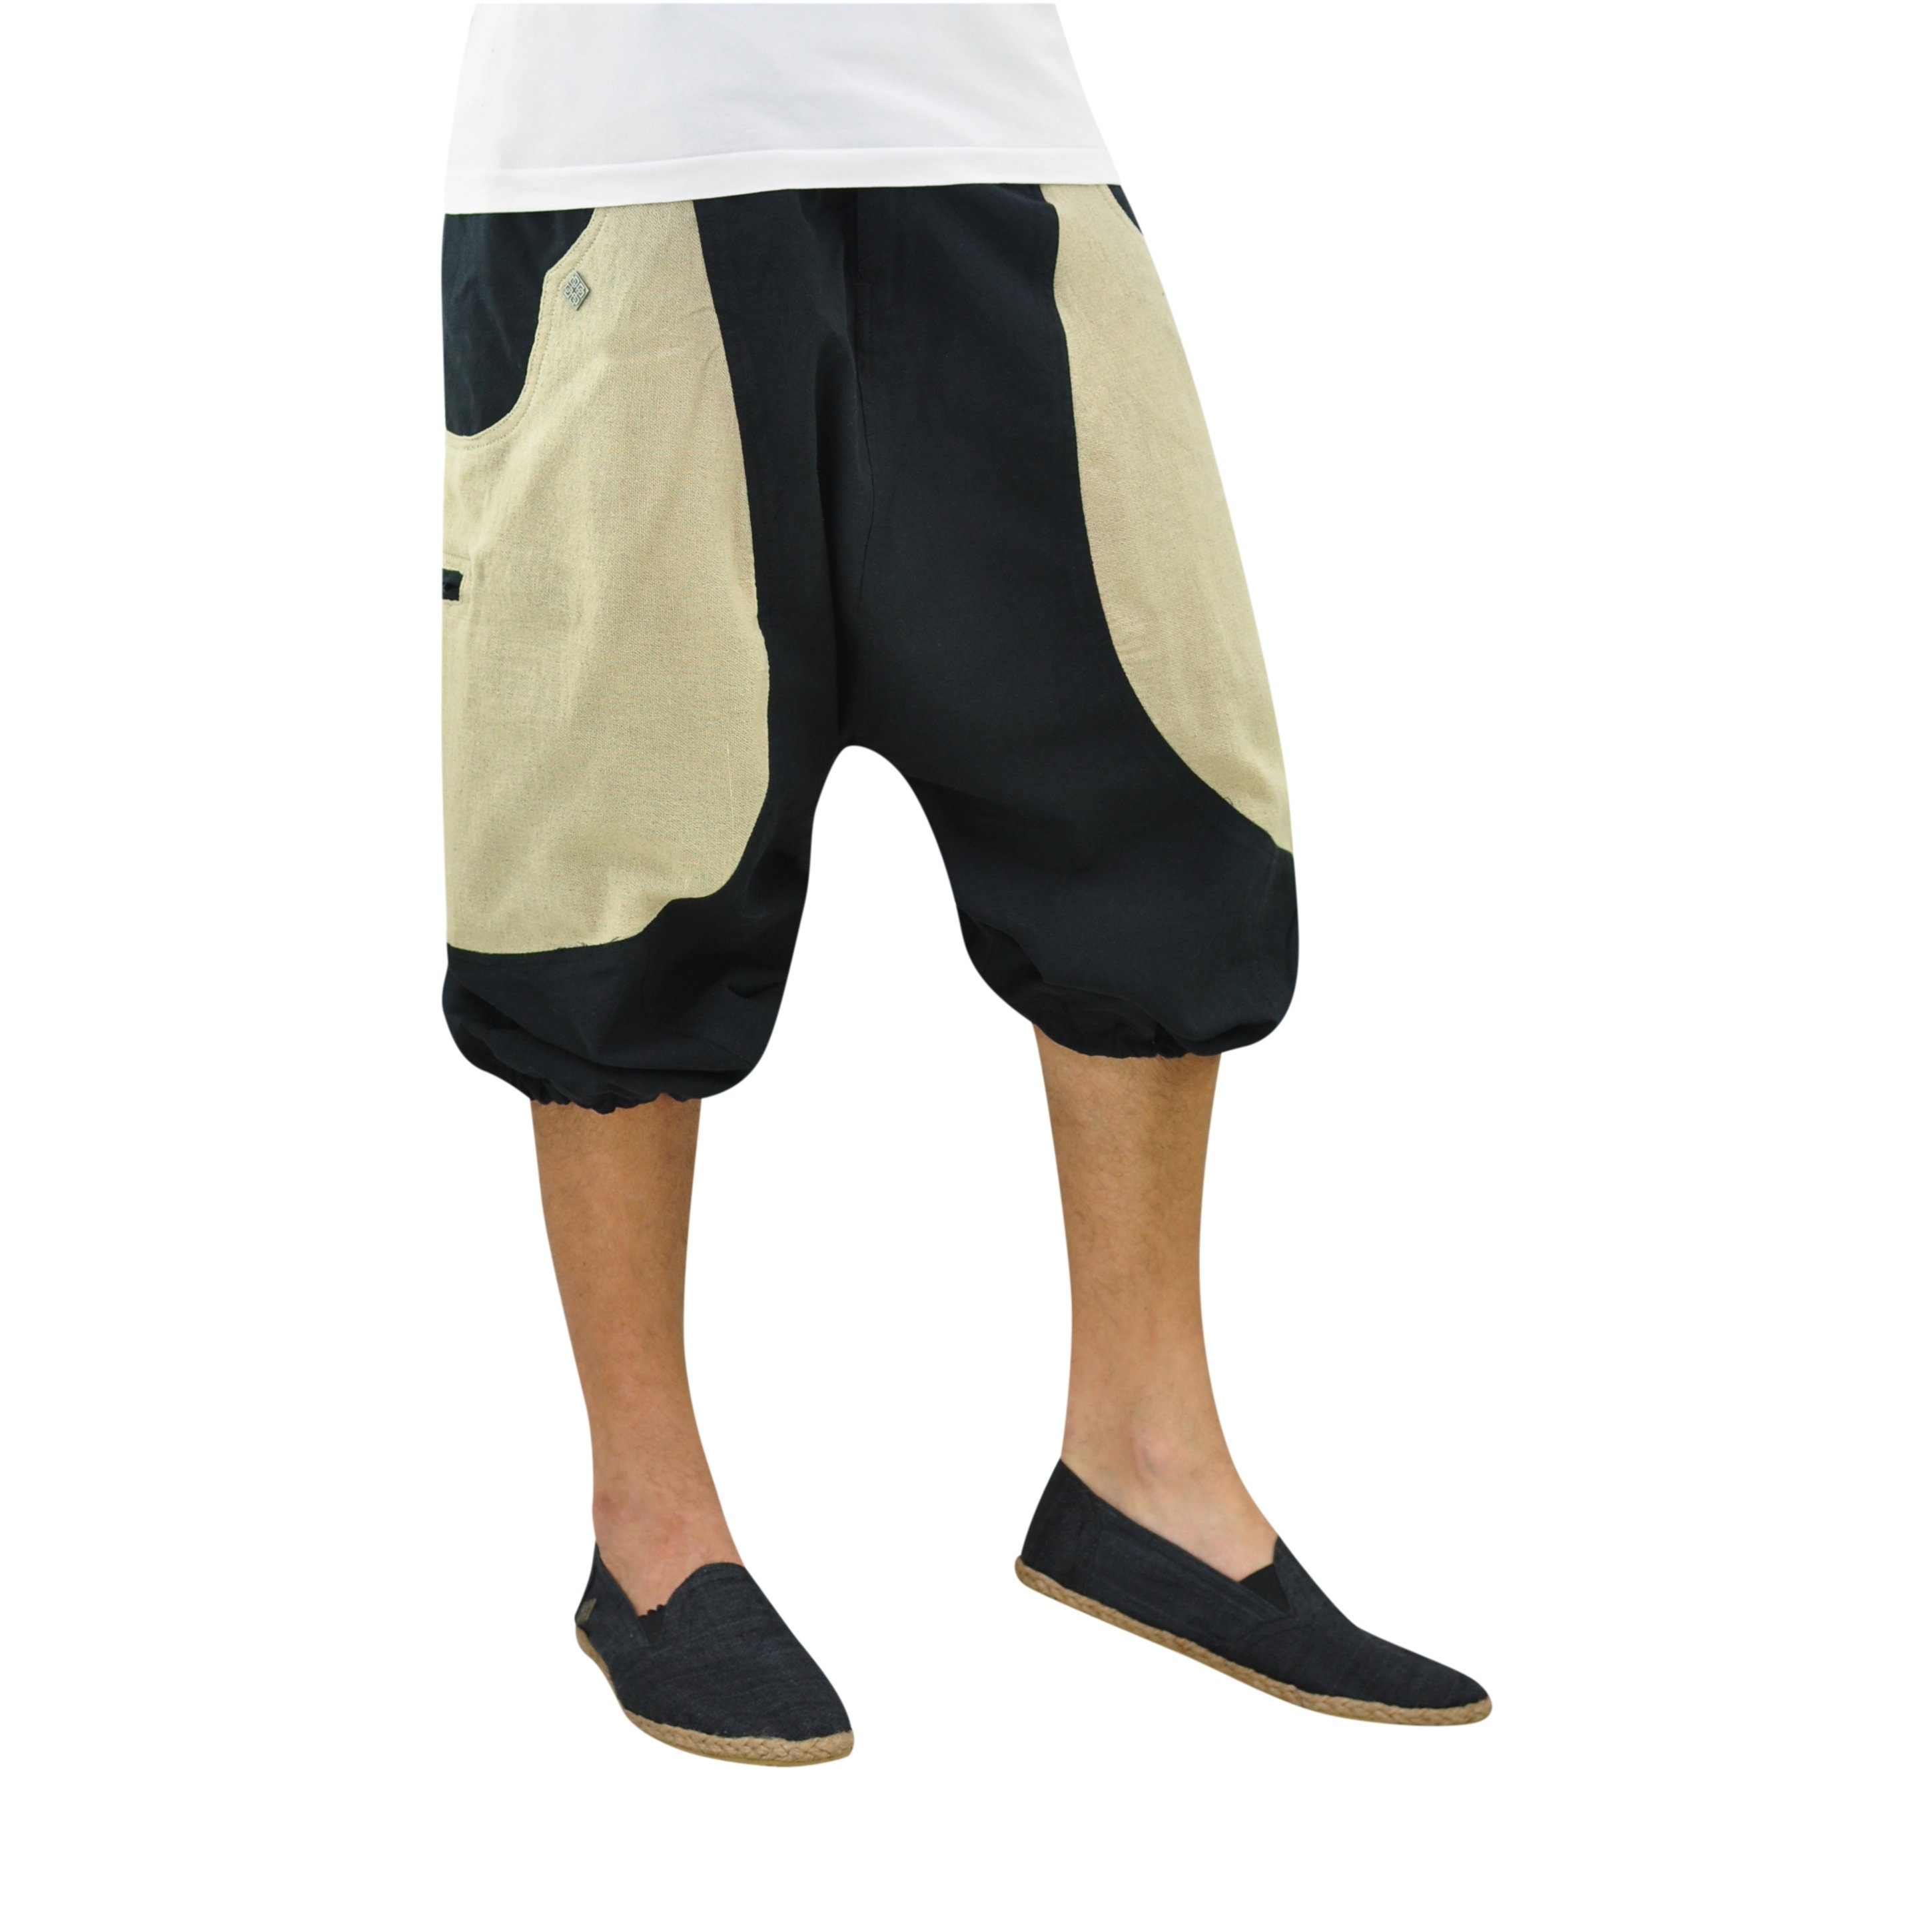 Damen, schwarz fallender Unisex, & Goa Haremshose kurz Farbblock-Design, virblatt Shorts mitteltief Reißverschlusstaschen Haremshose Hose 2 Schritt, kurze Herren